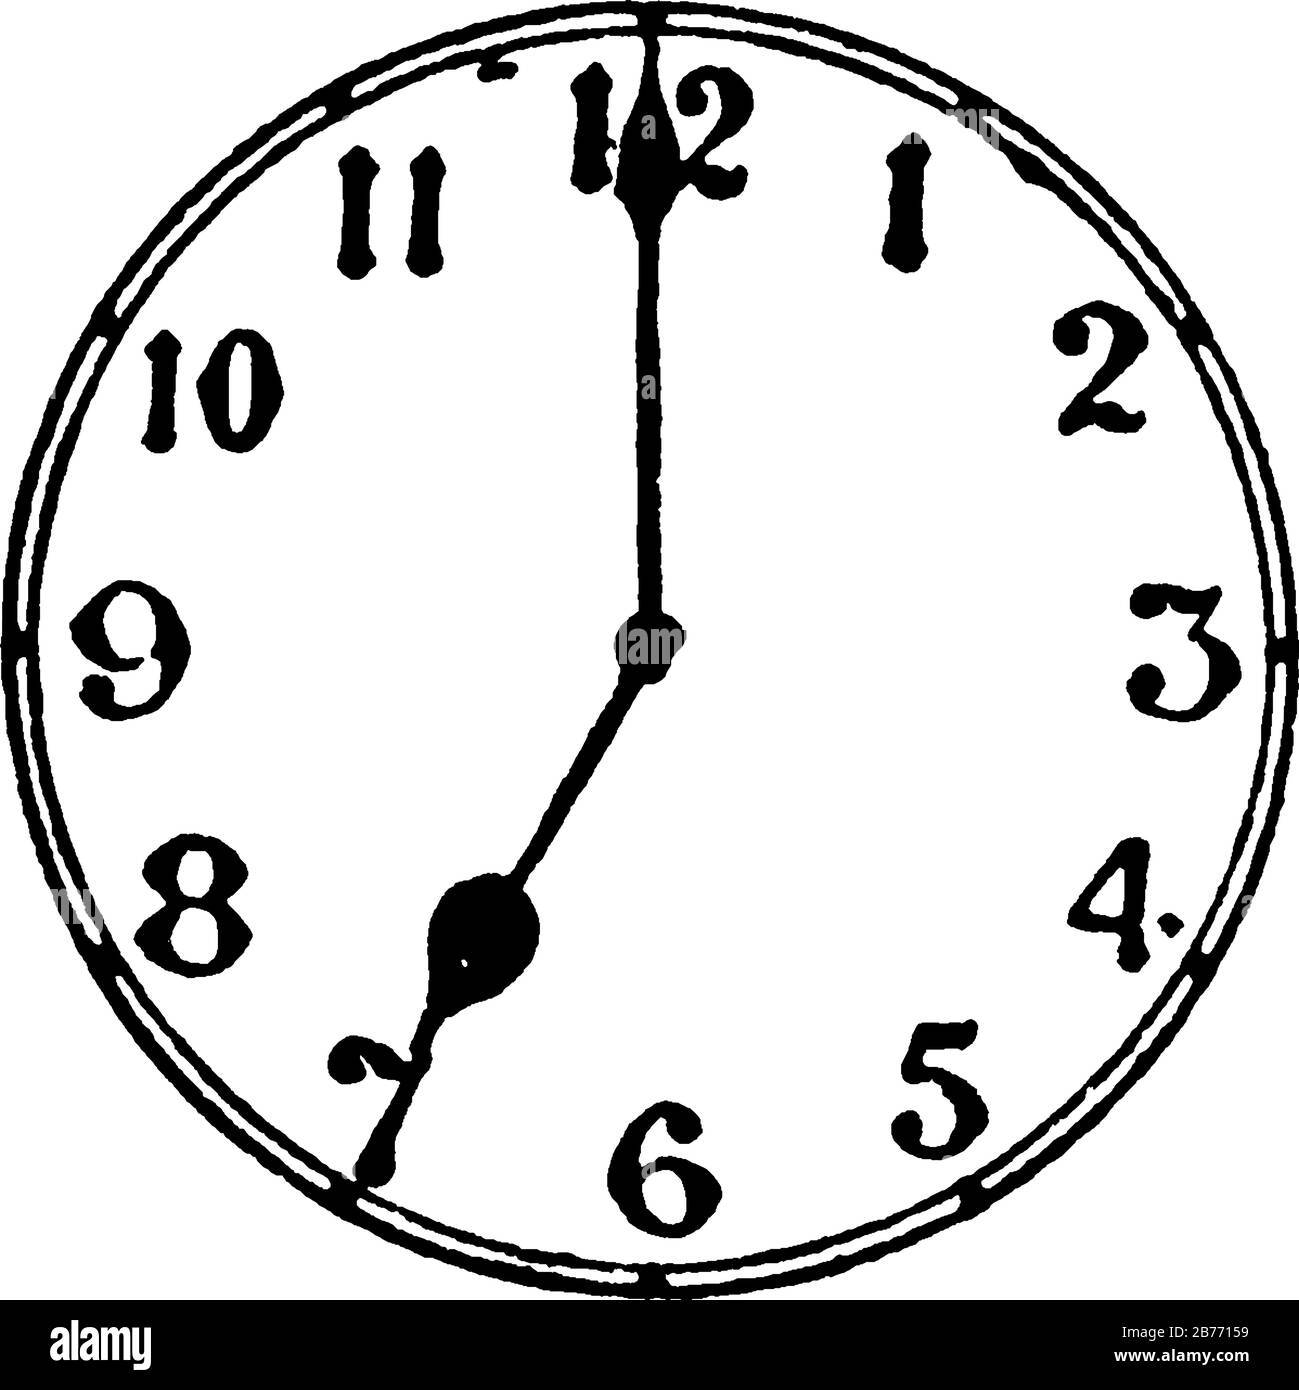 Часы остановились на 7. Циферблат со стрелками. Изображение часов. Циферблат 7 часов. Макет часов.